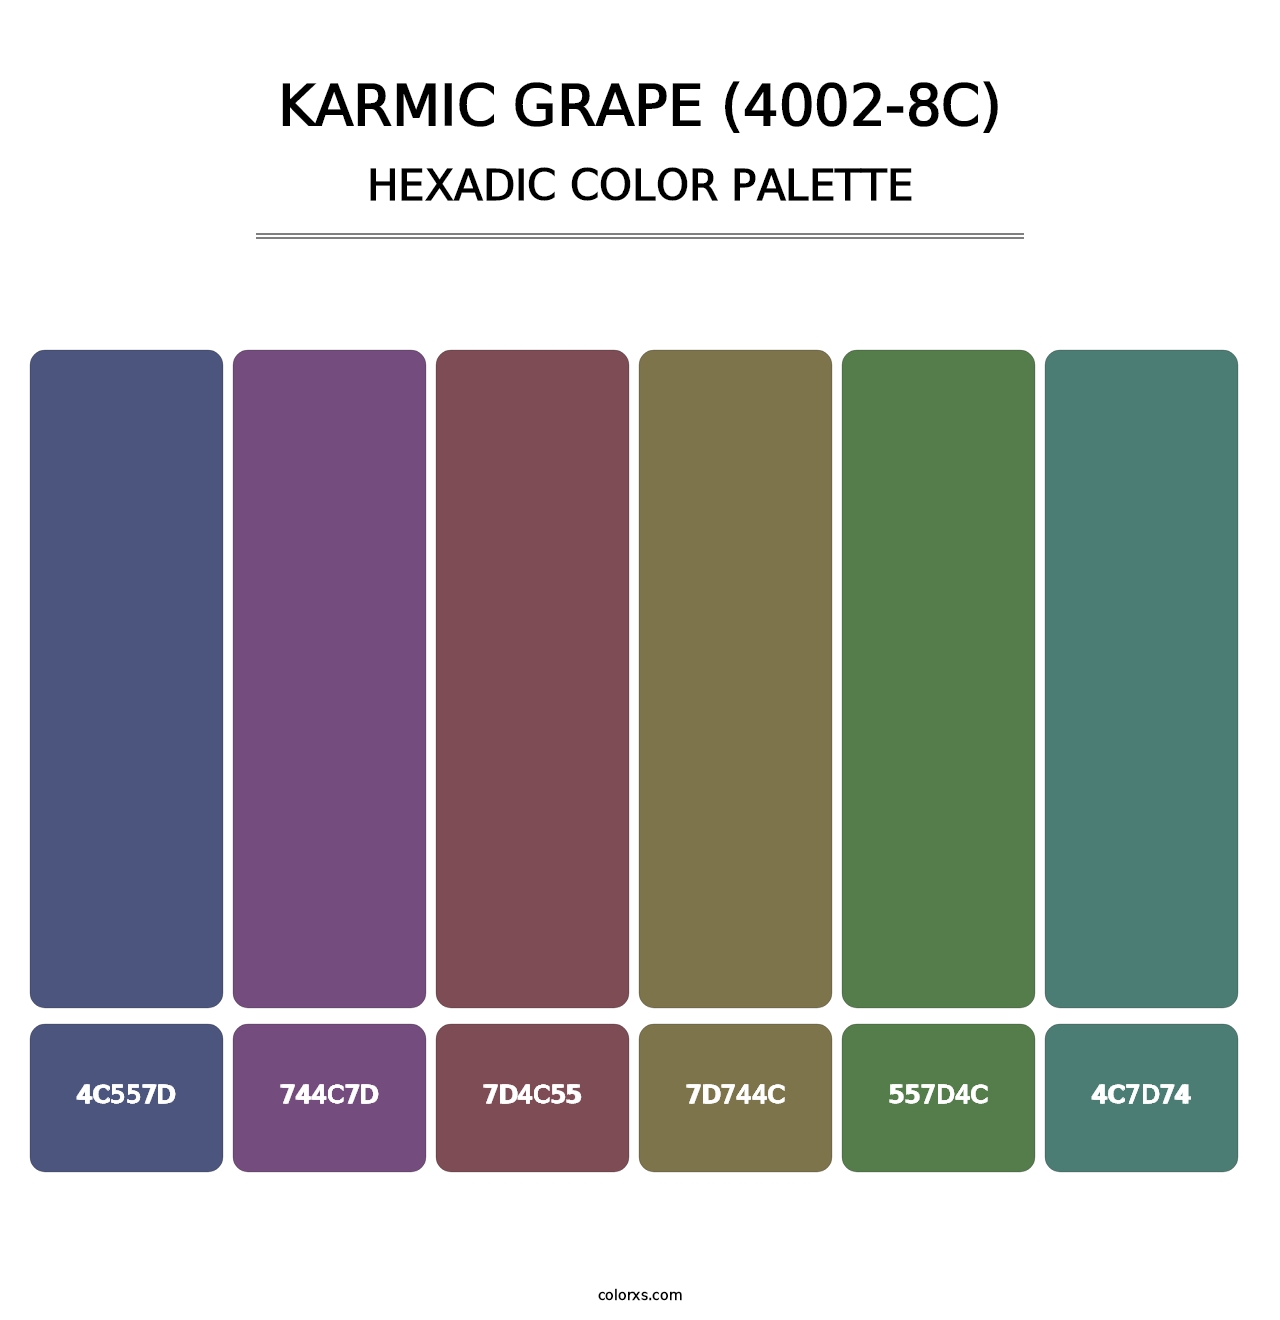 Karmic Grape (4002-8C) - Hexadic Color Palette